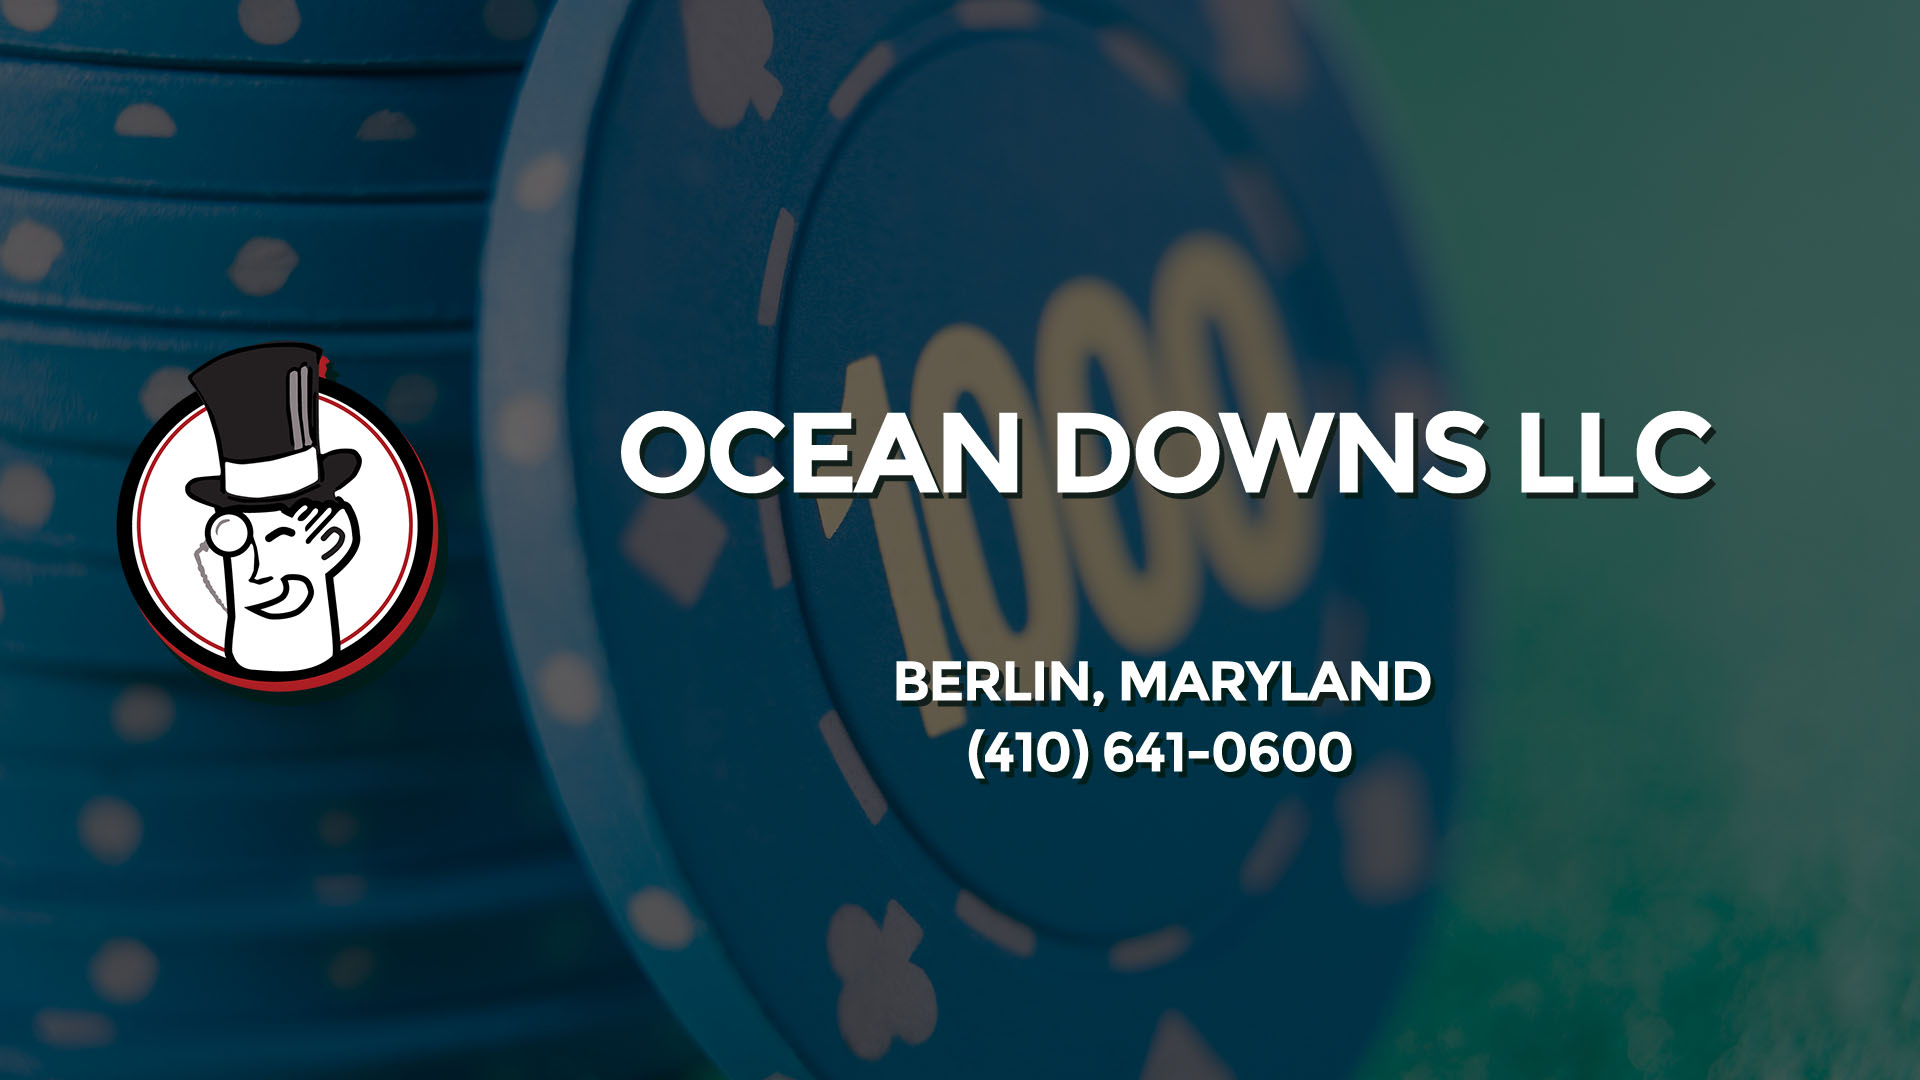 ocean downs casino video poker review